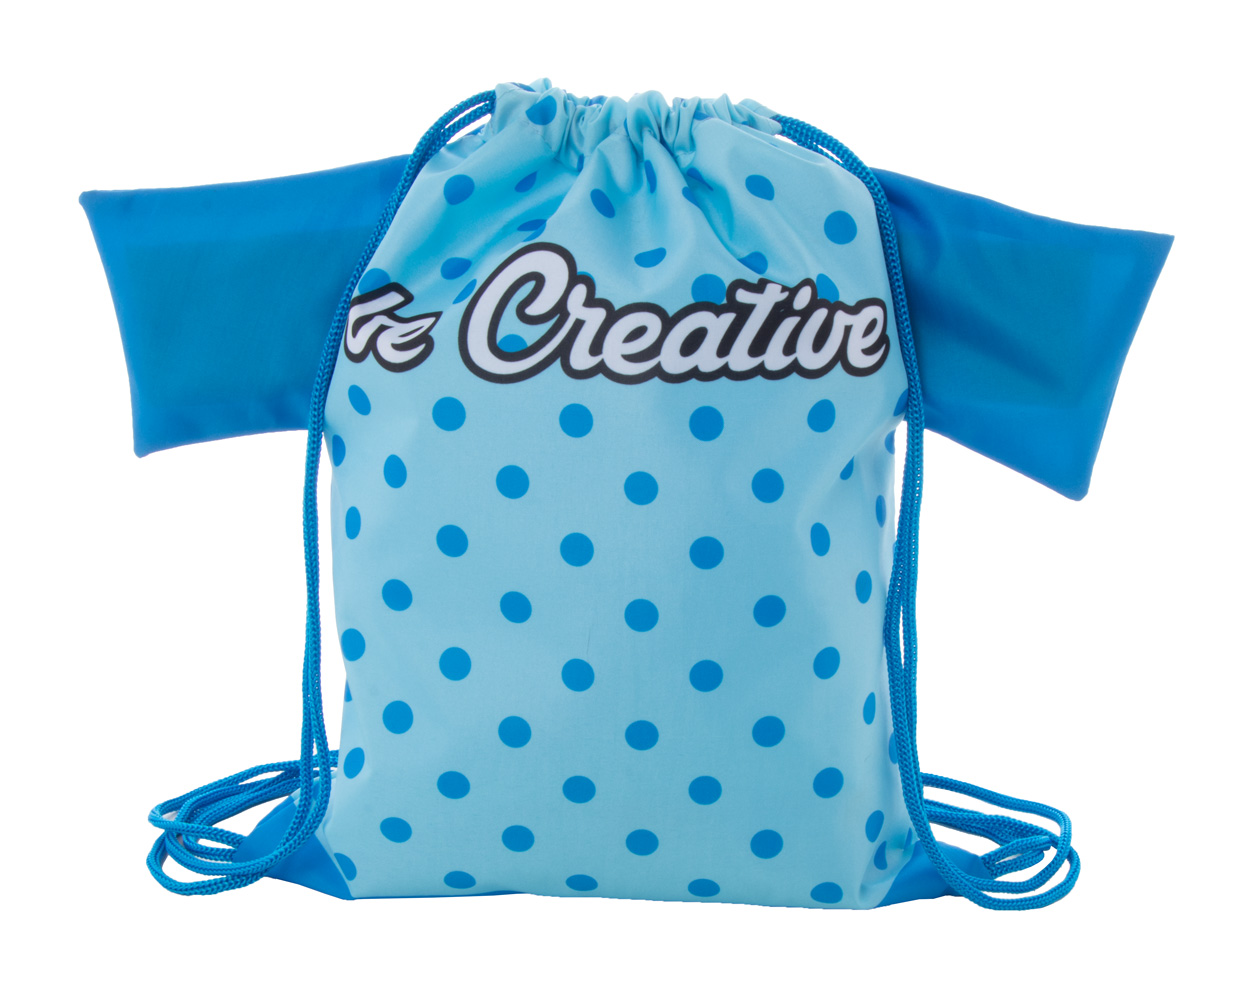 CreaDraw T Kids drawstring bag for children - blue